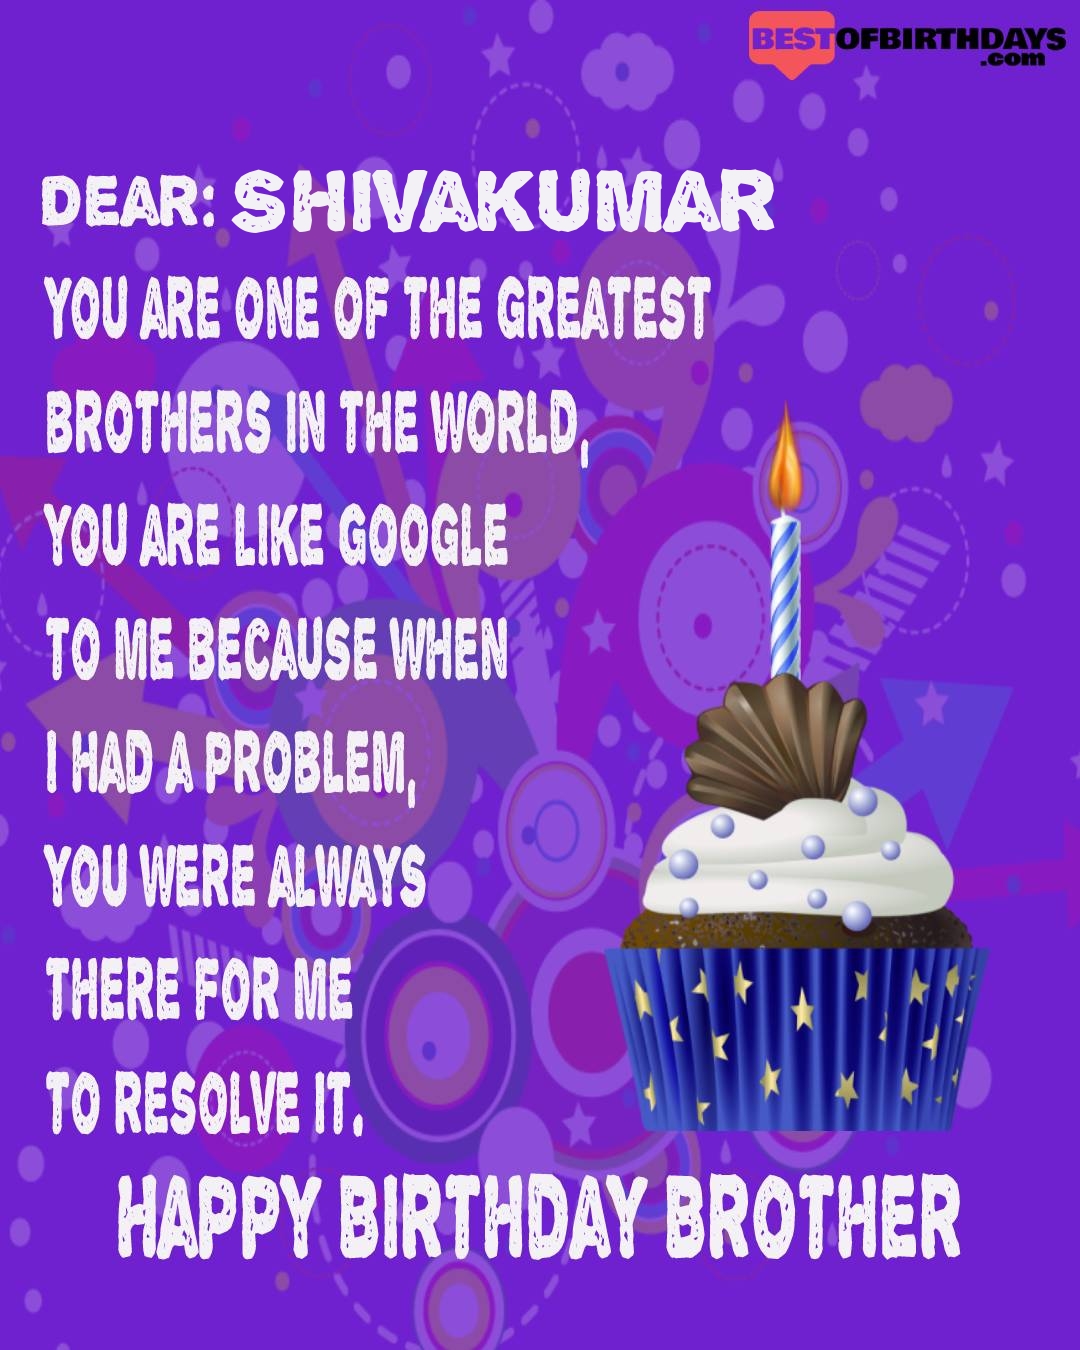 Happy birthday shivakumar bhai brother bro